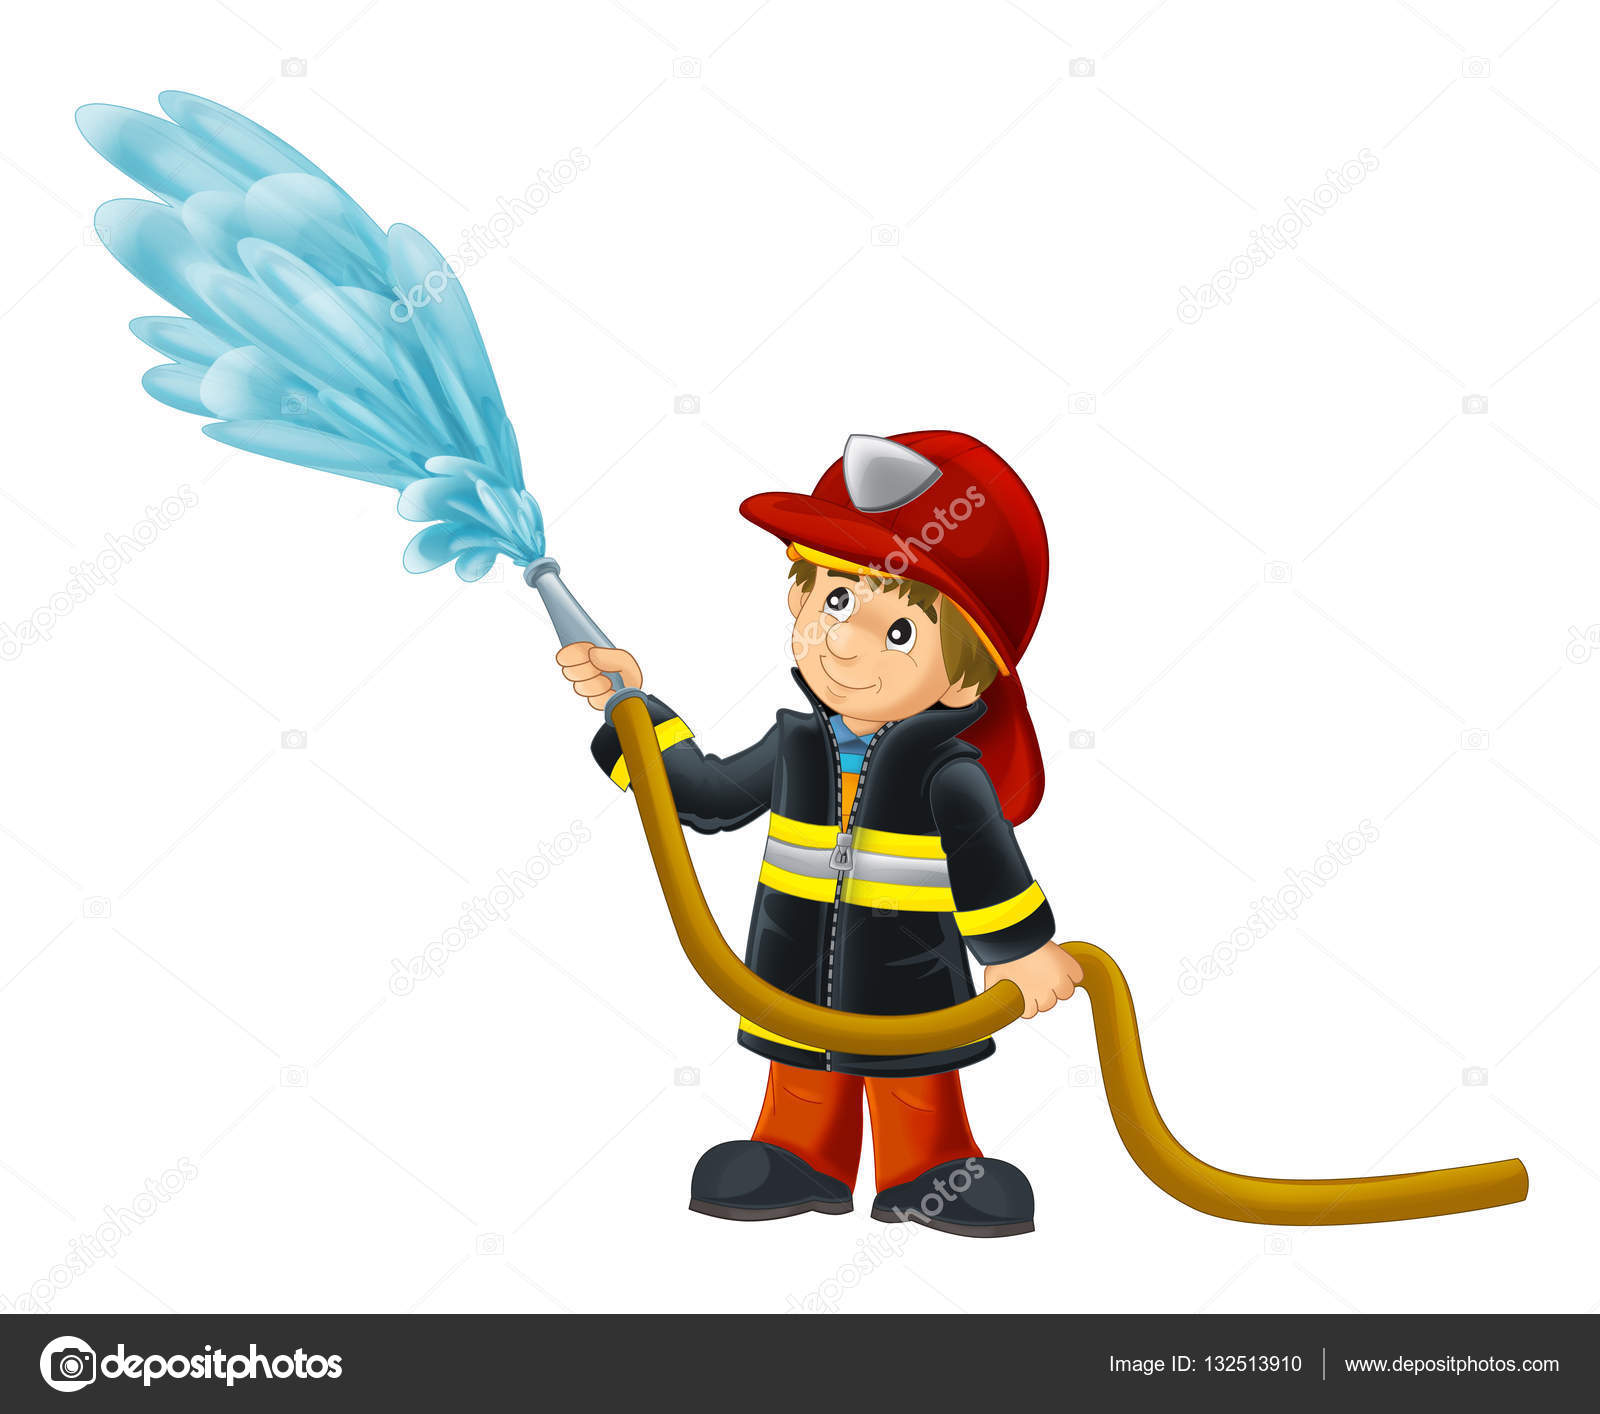 Fireman hose cartoon Stock Photos, Royalty Free Fireman hose cartoon Images  | Depositphotos